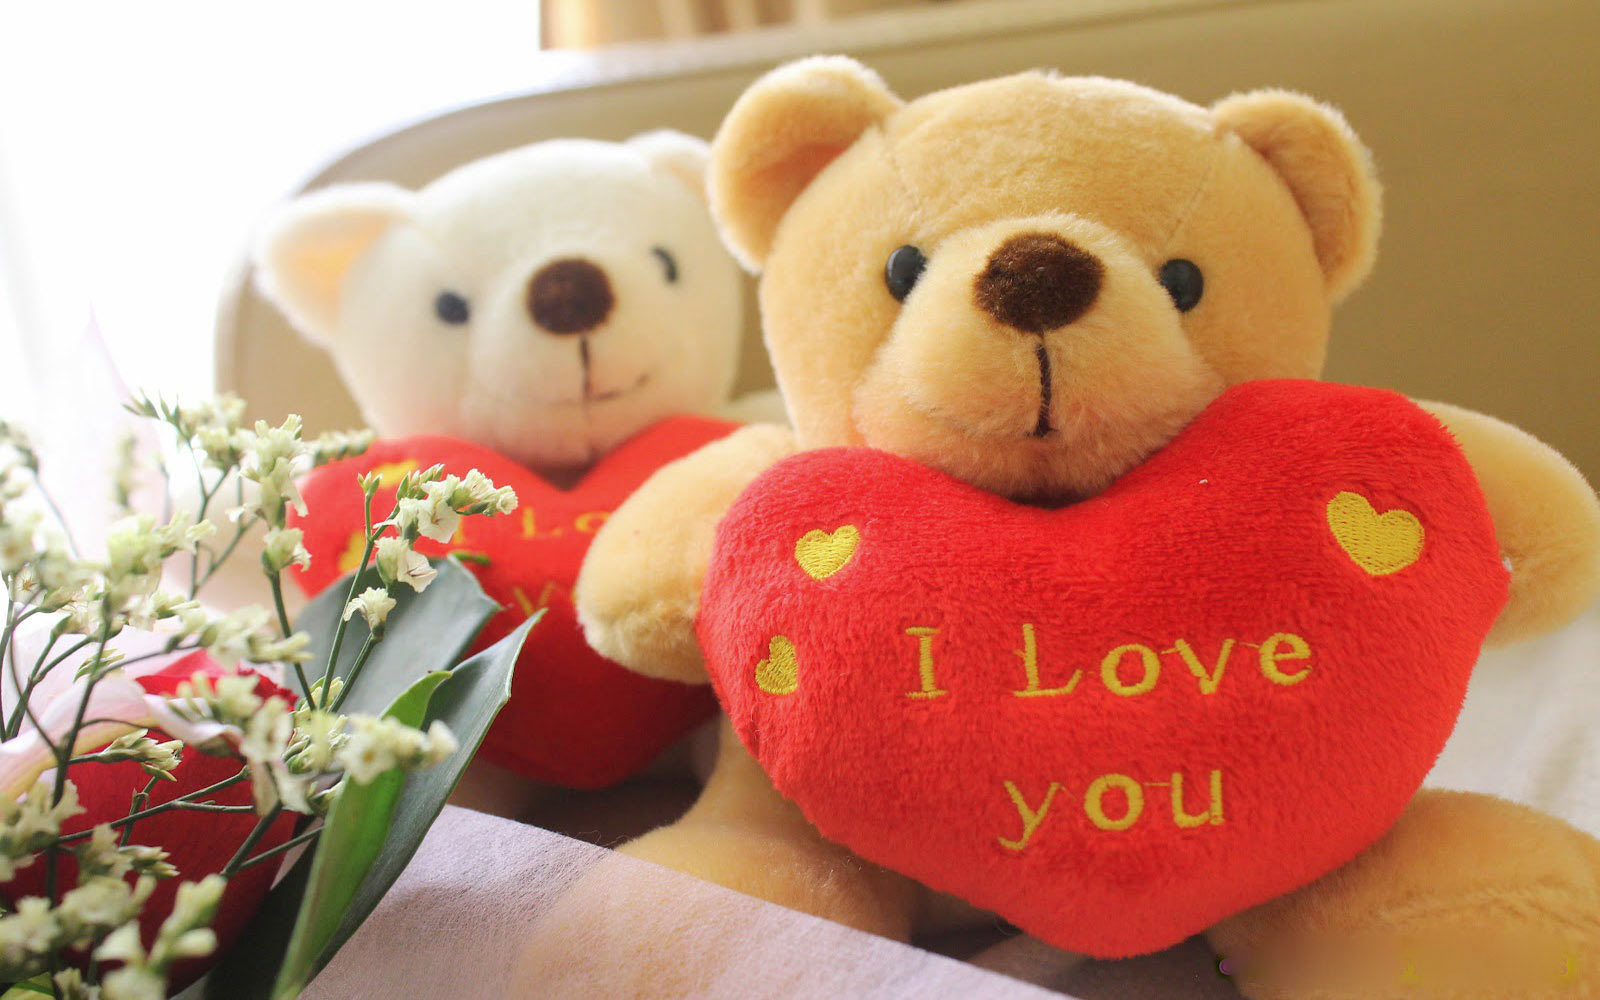 i love you happy teddy bear day wishes